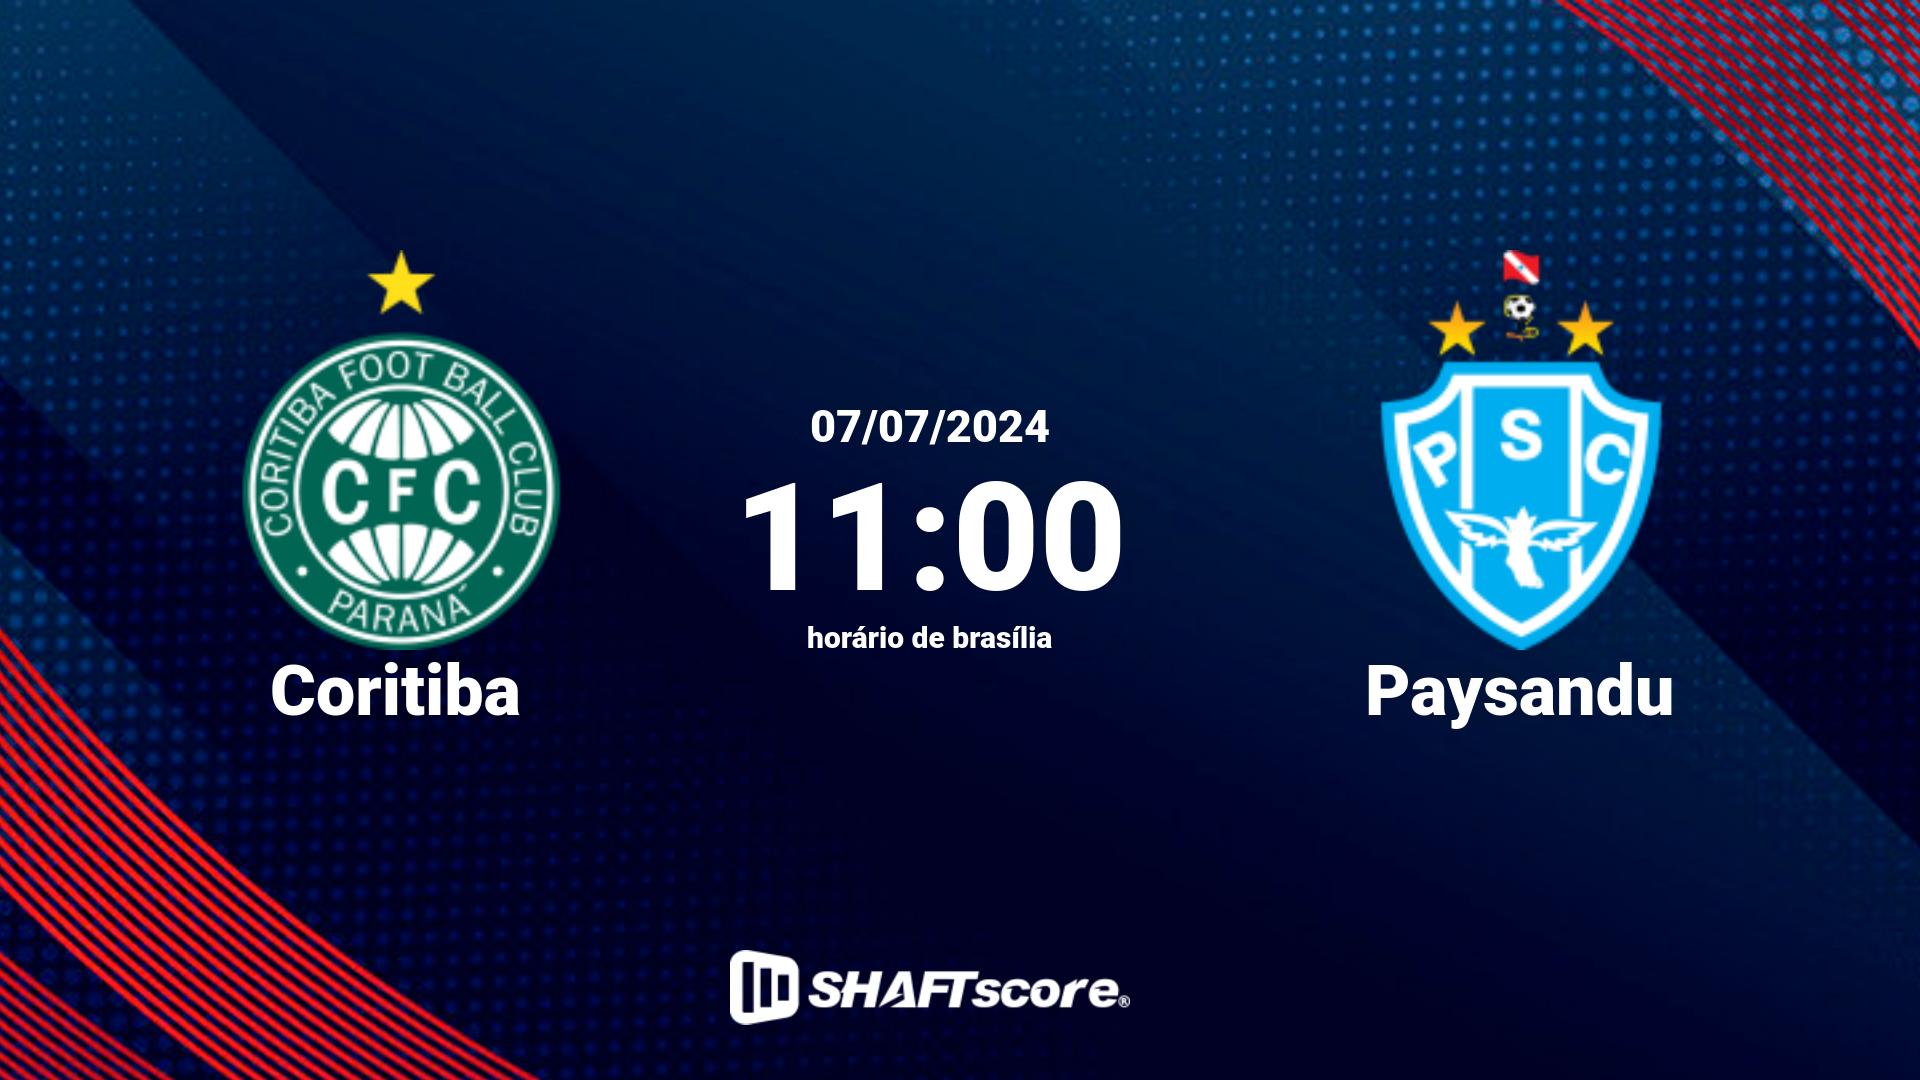 Estatísticas do jogo Coritiba vs Paysandu 07.07 11:00